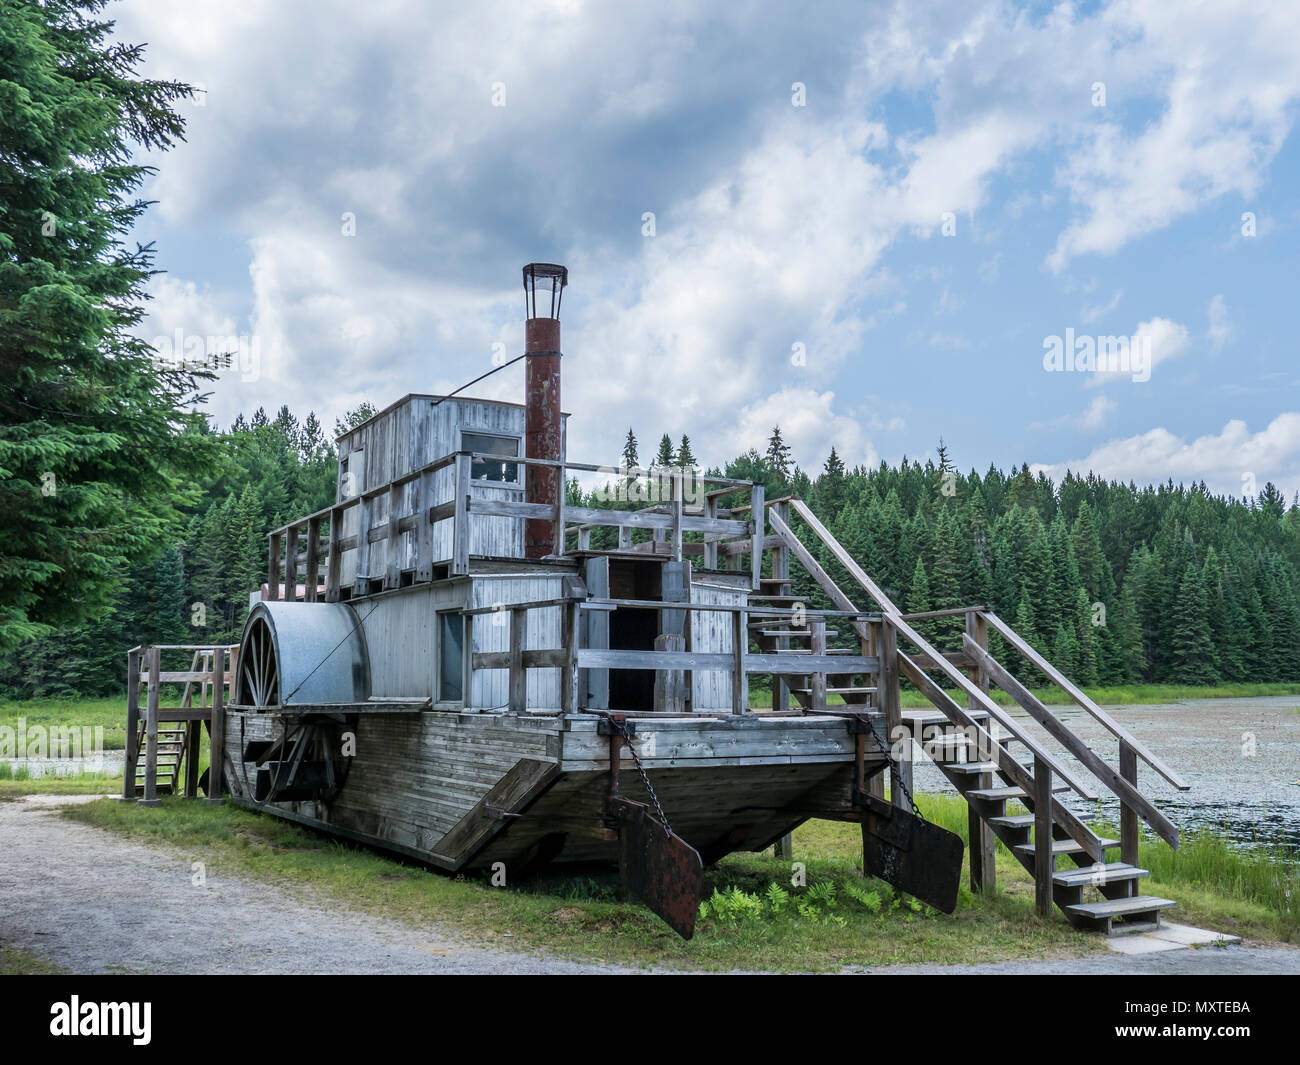 Steam-driven 'alligator' boat, Algonquin Logging Museum, Algonquin Provincial Park, Ontario, Canada. Stock Photo